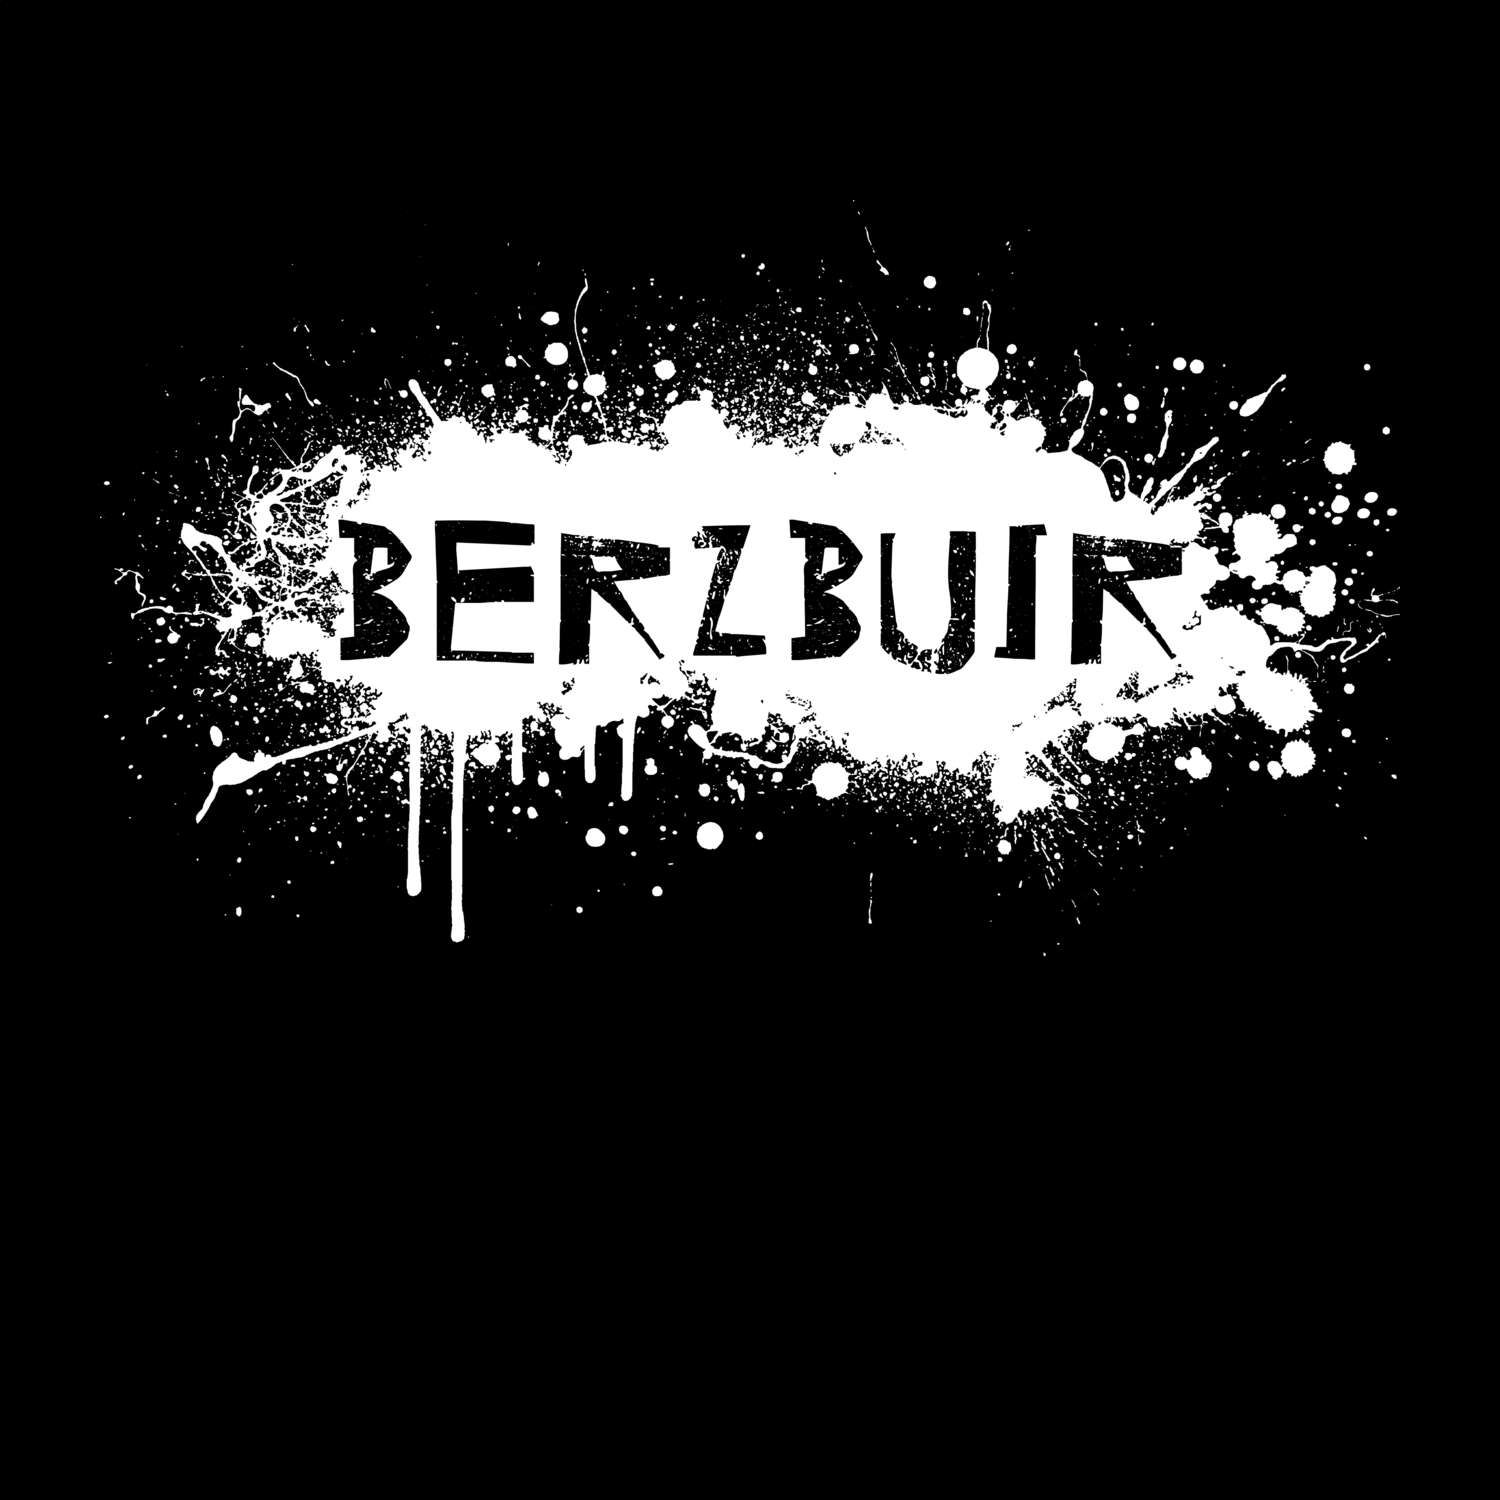 Berzbuir T-Shirt »Paint Splash Punk«